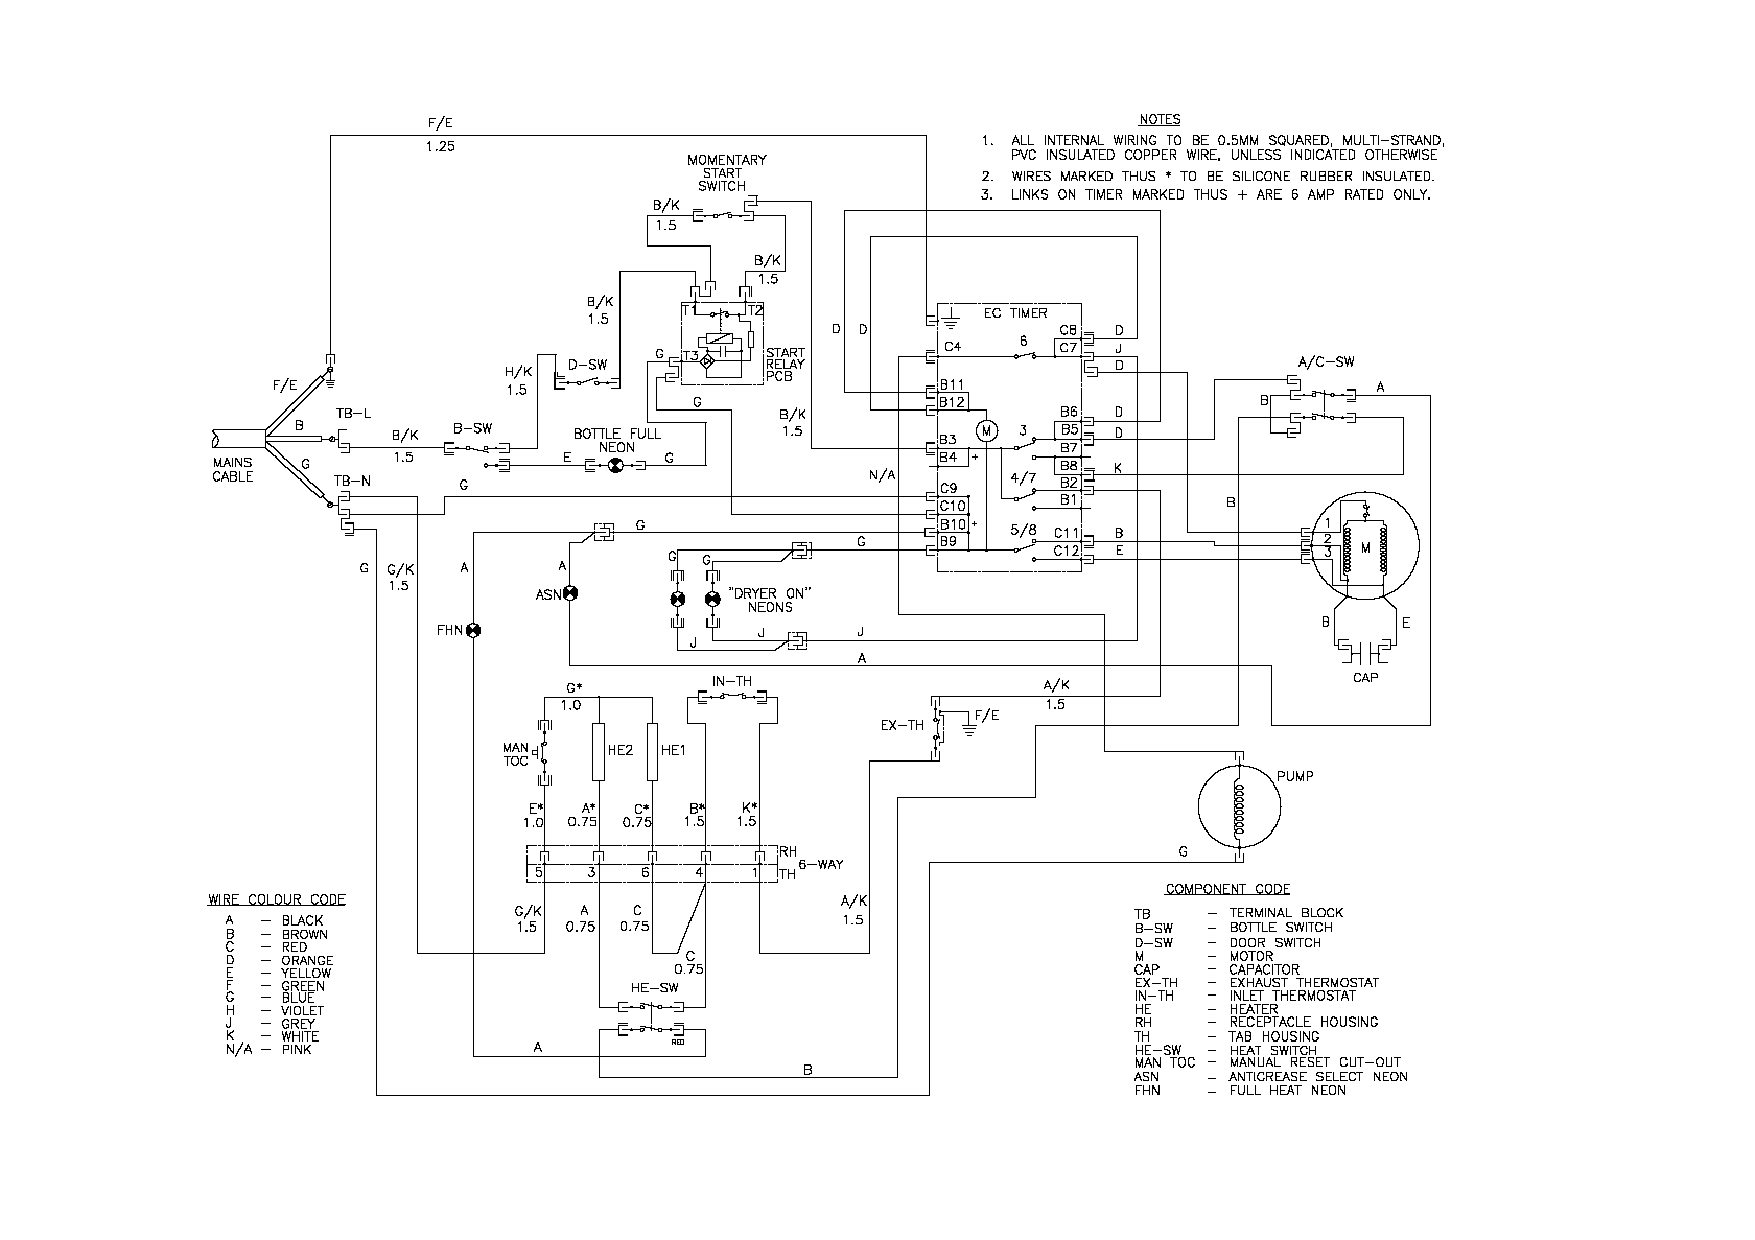 kdc-bt368u wiring diagram